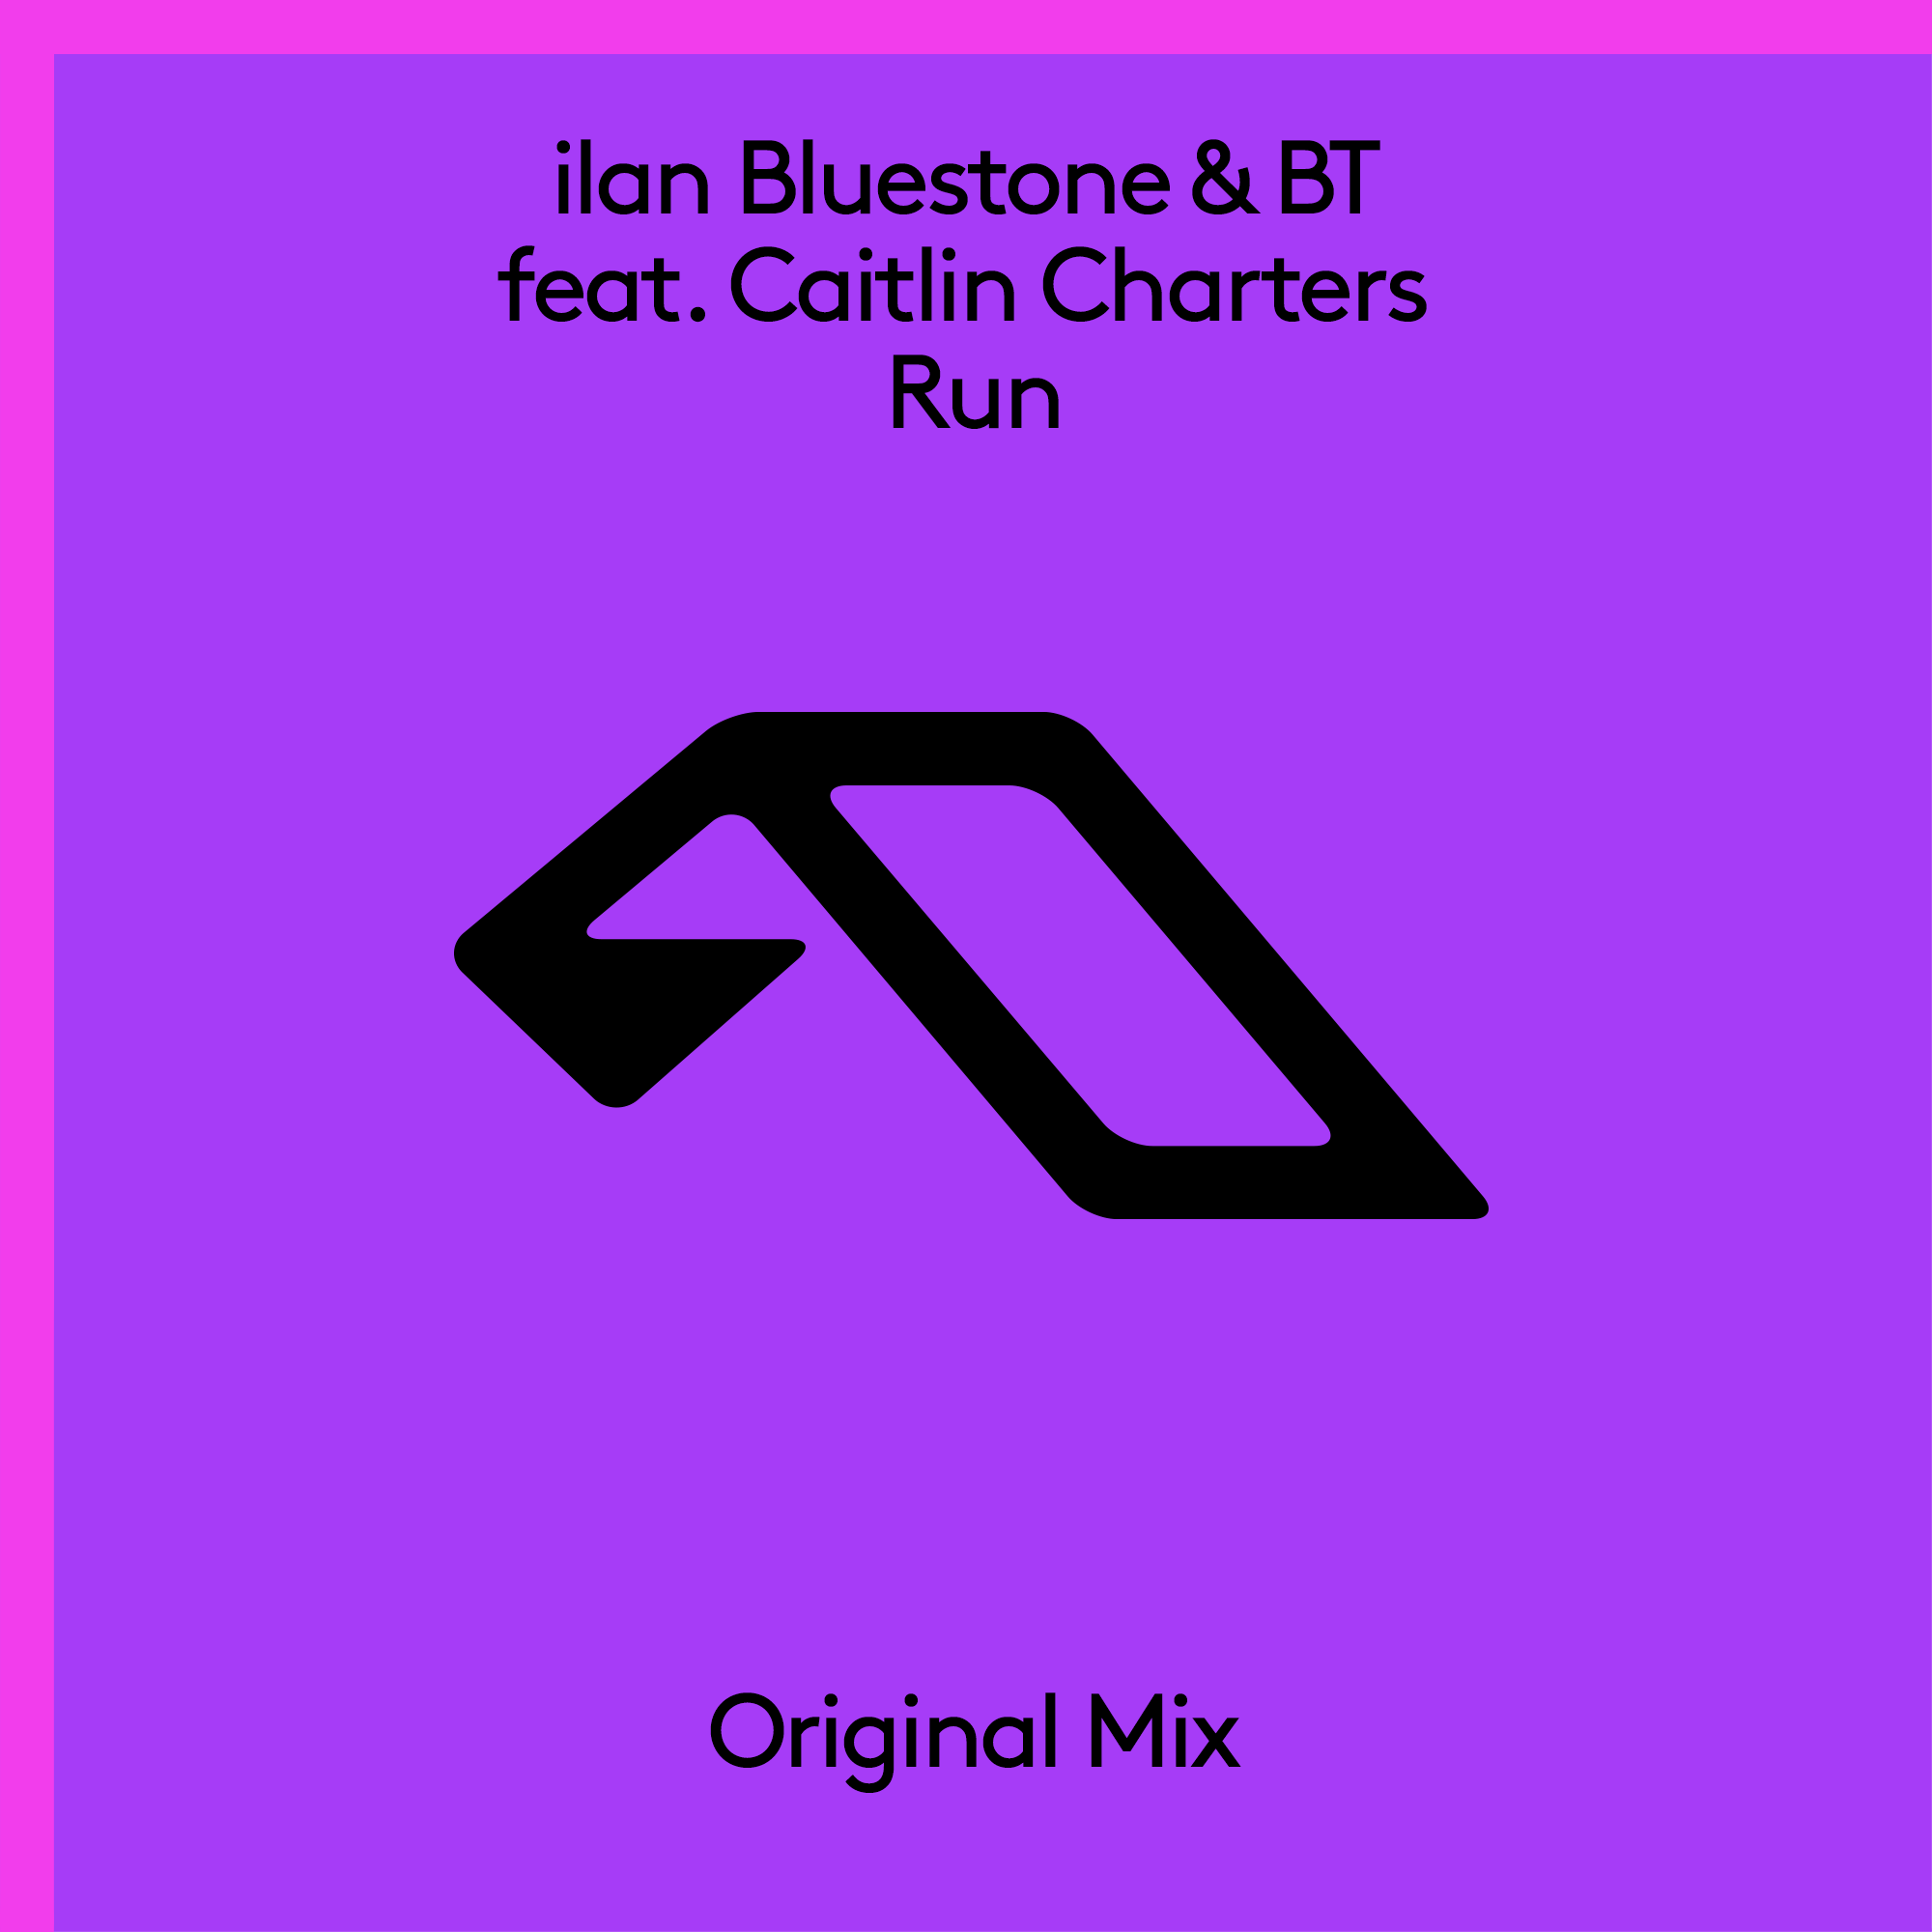 ilan Bluestone & BT featuring Caitlin Charters — Run cover artwork